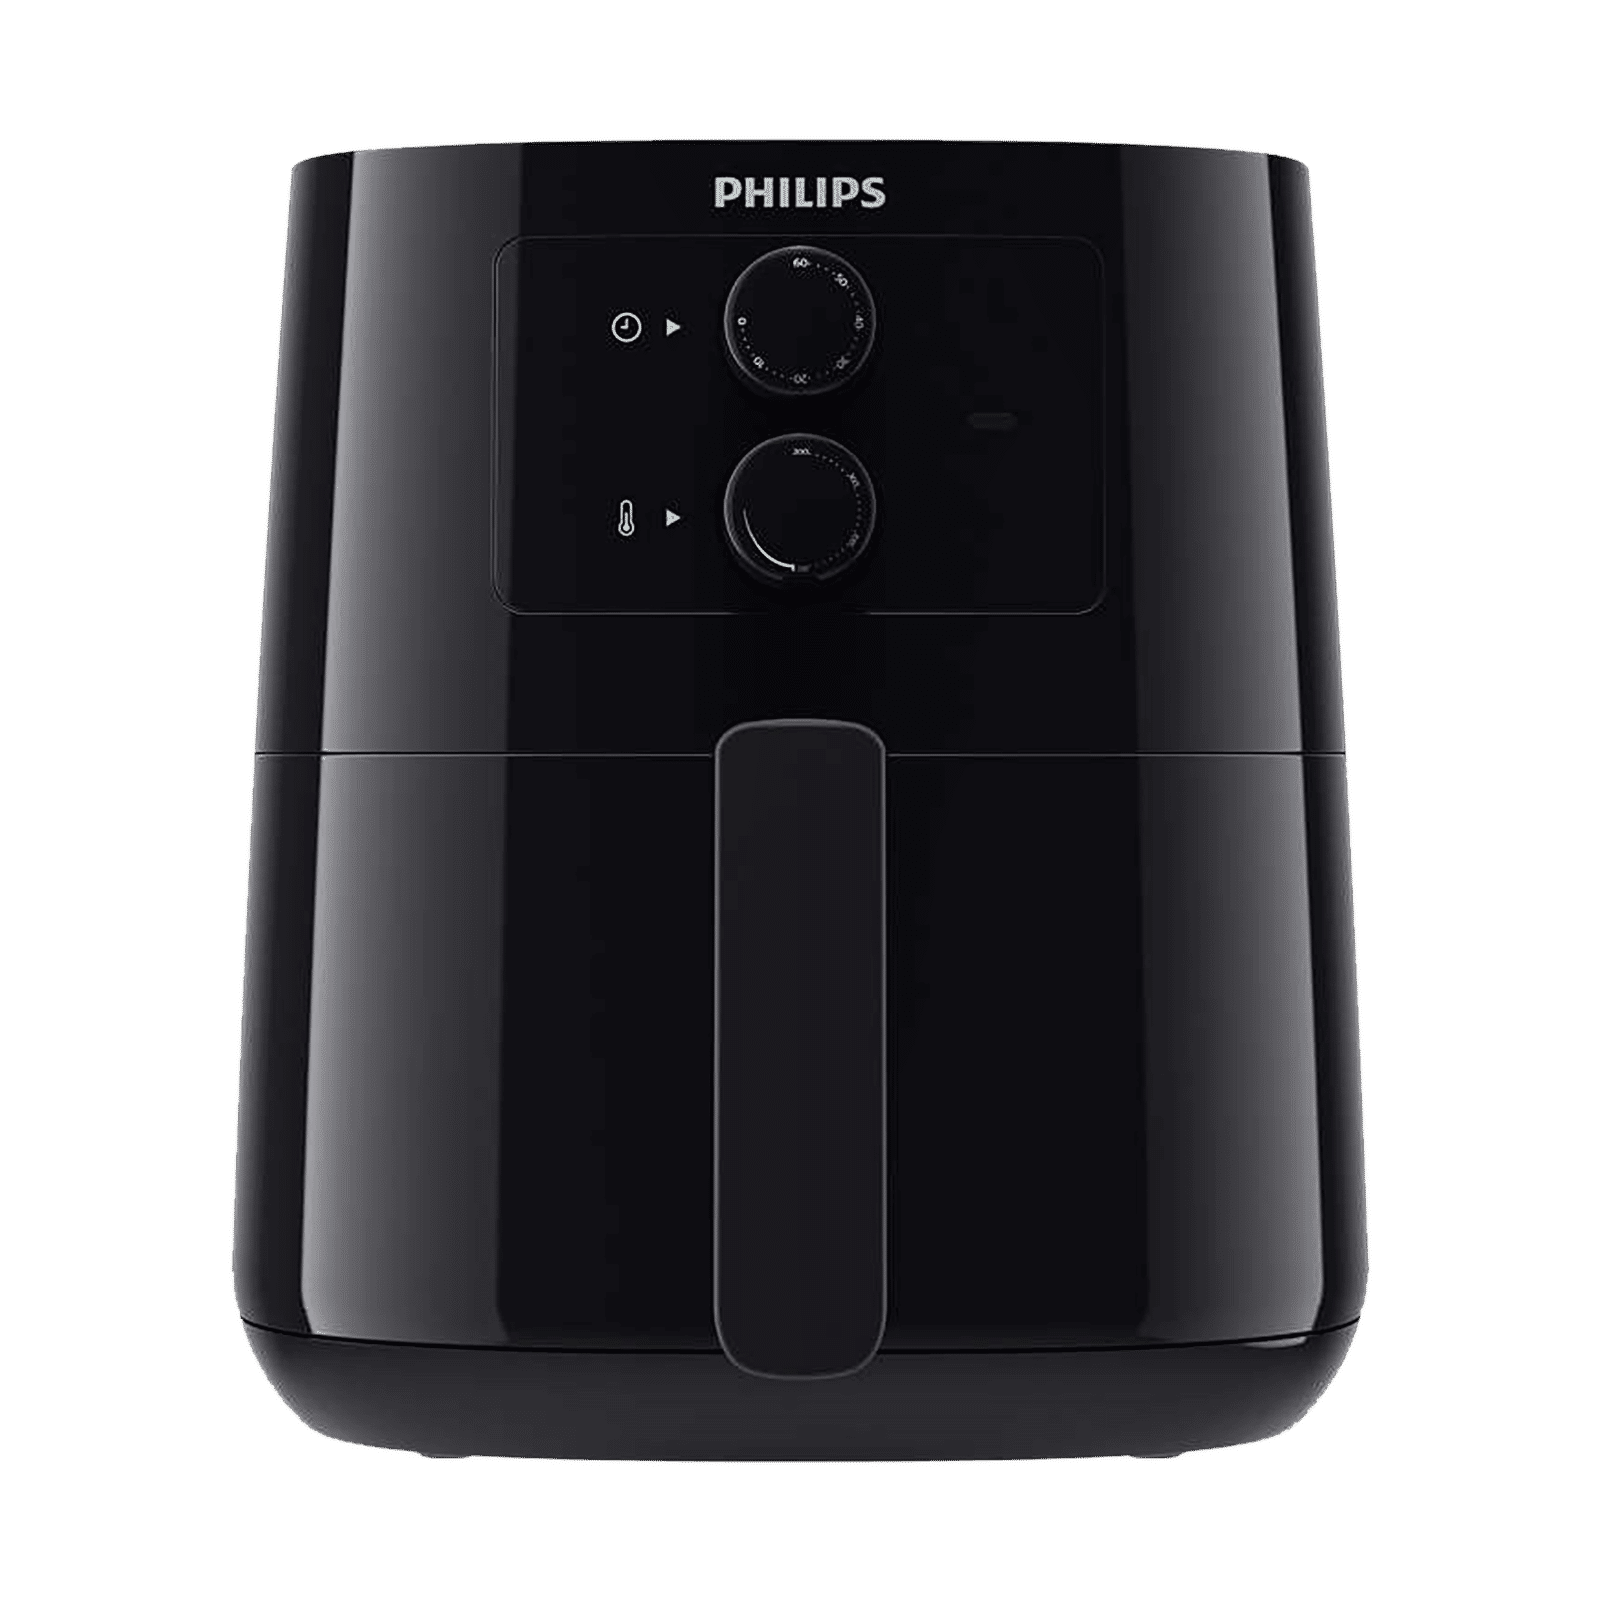 PHILIPS Spectre 4.1L 1400 Watt Air Fryer with Rapid Air Technology (Black)